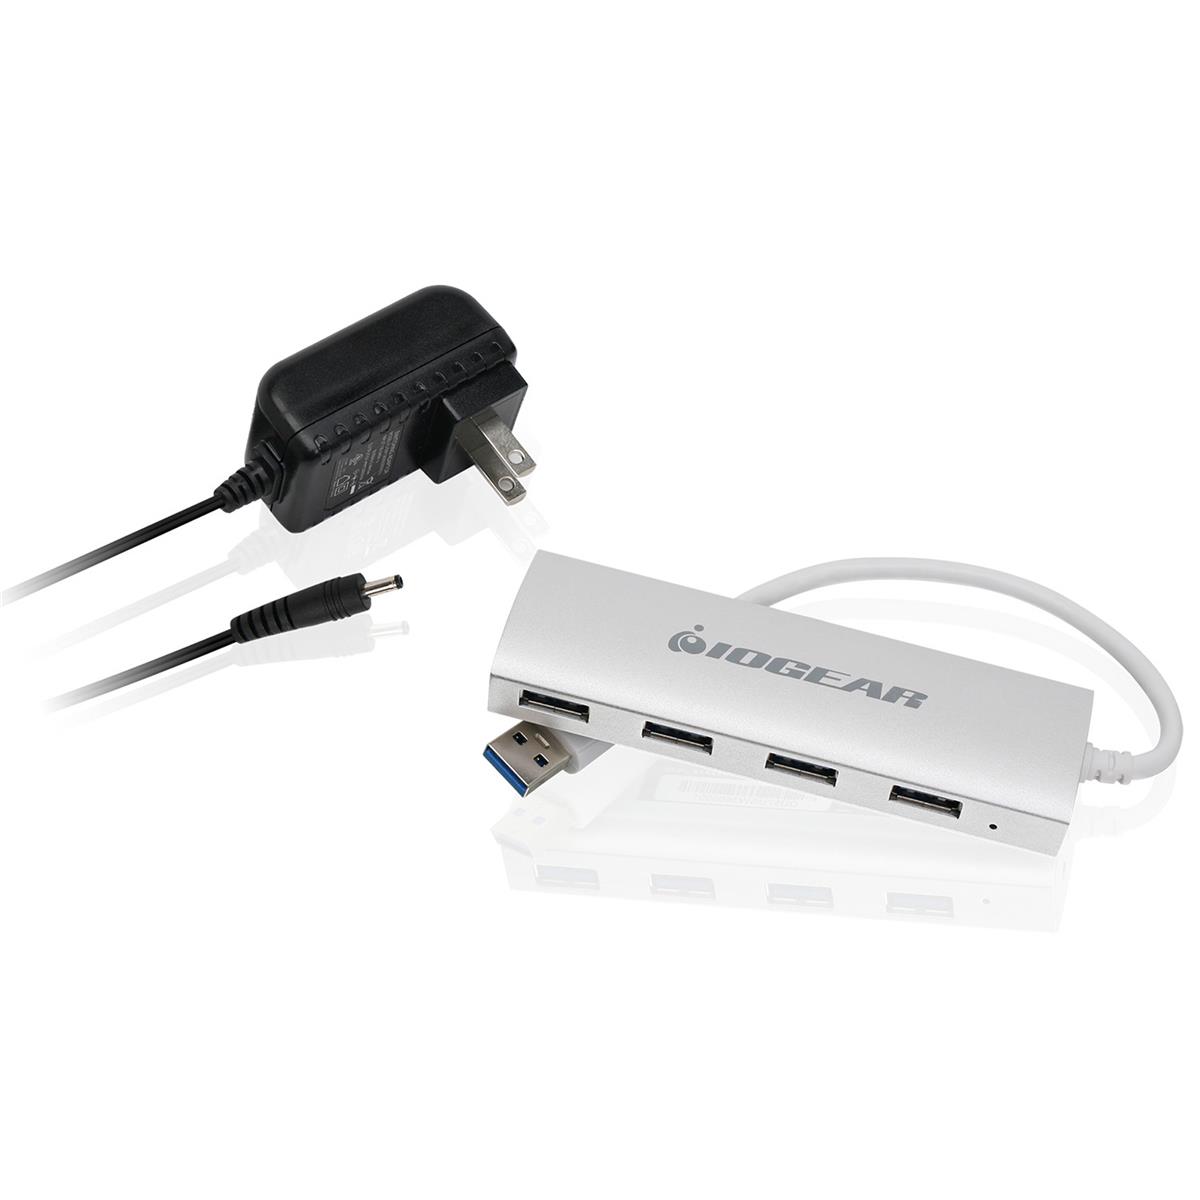 Image of IOGEAR GUH304P Aluminum USB 3.0 4-Port Hub with Power Supply